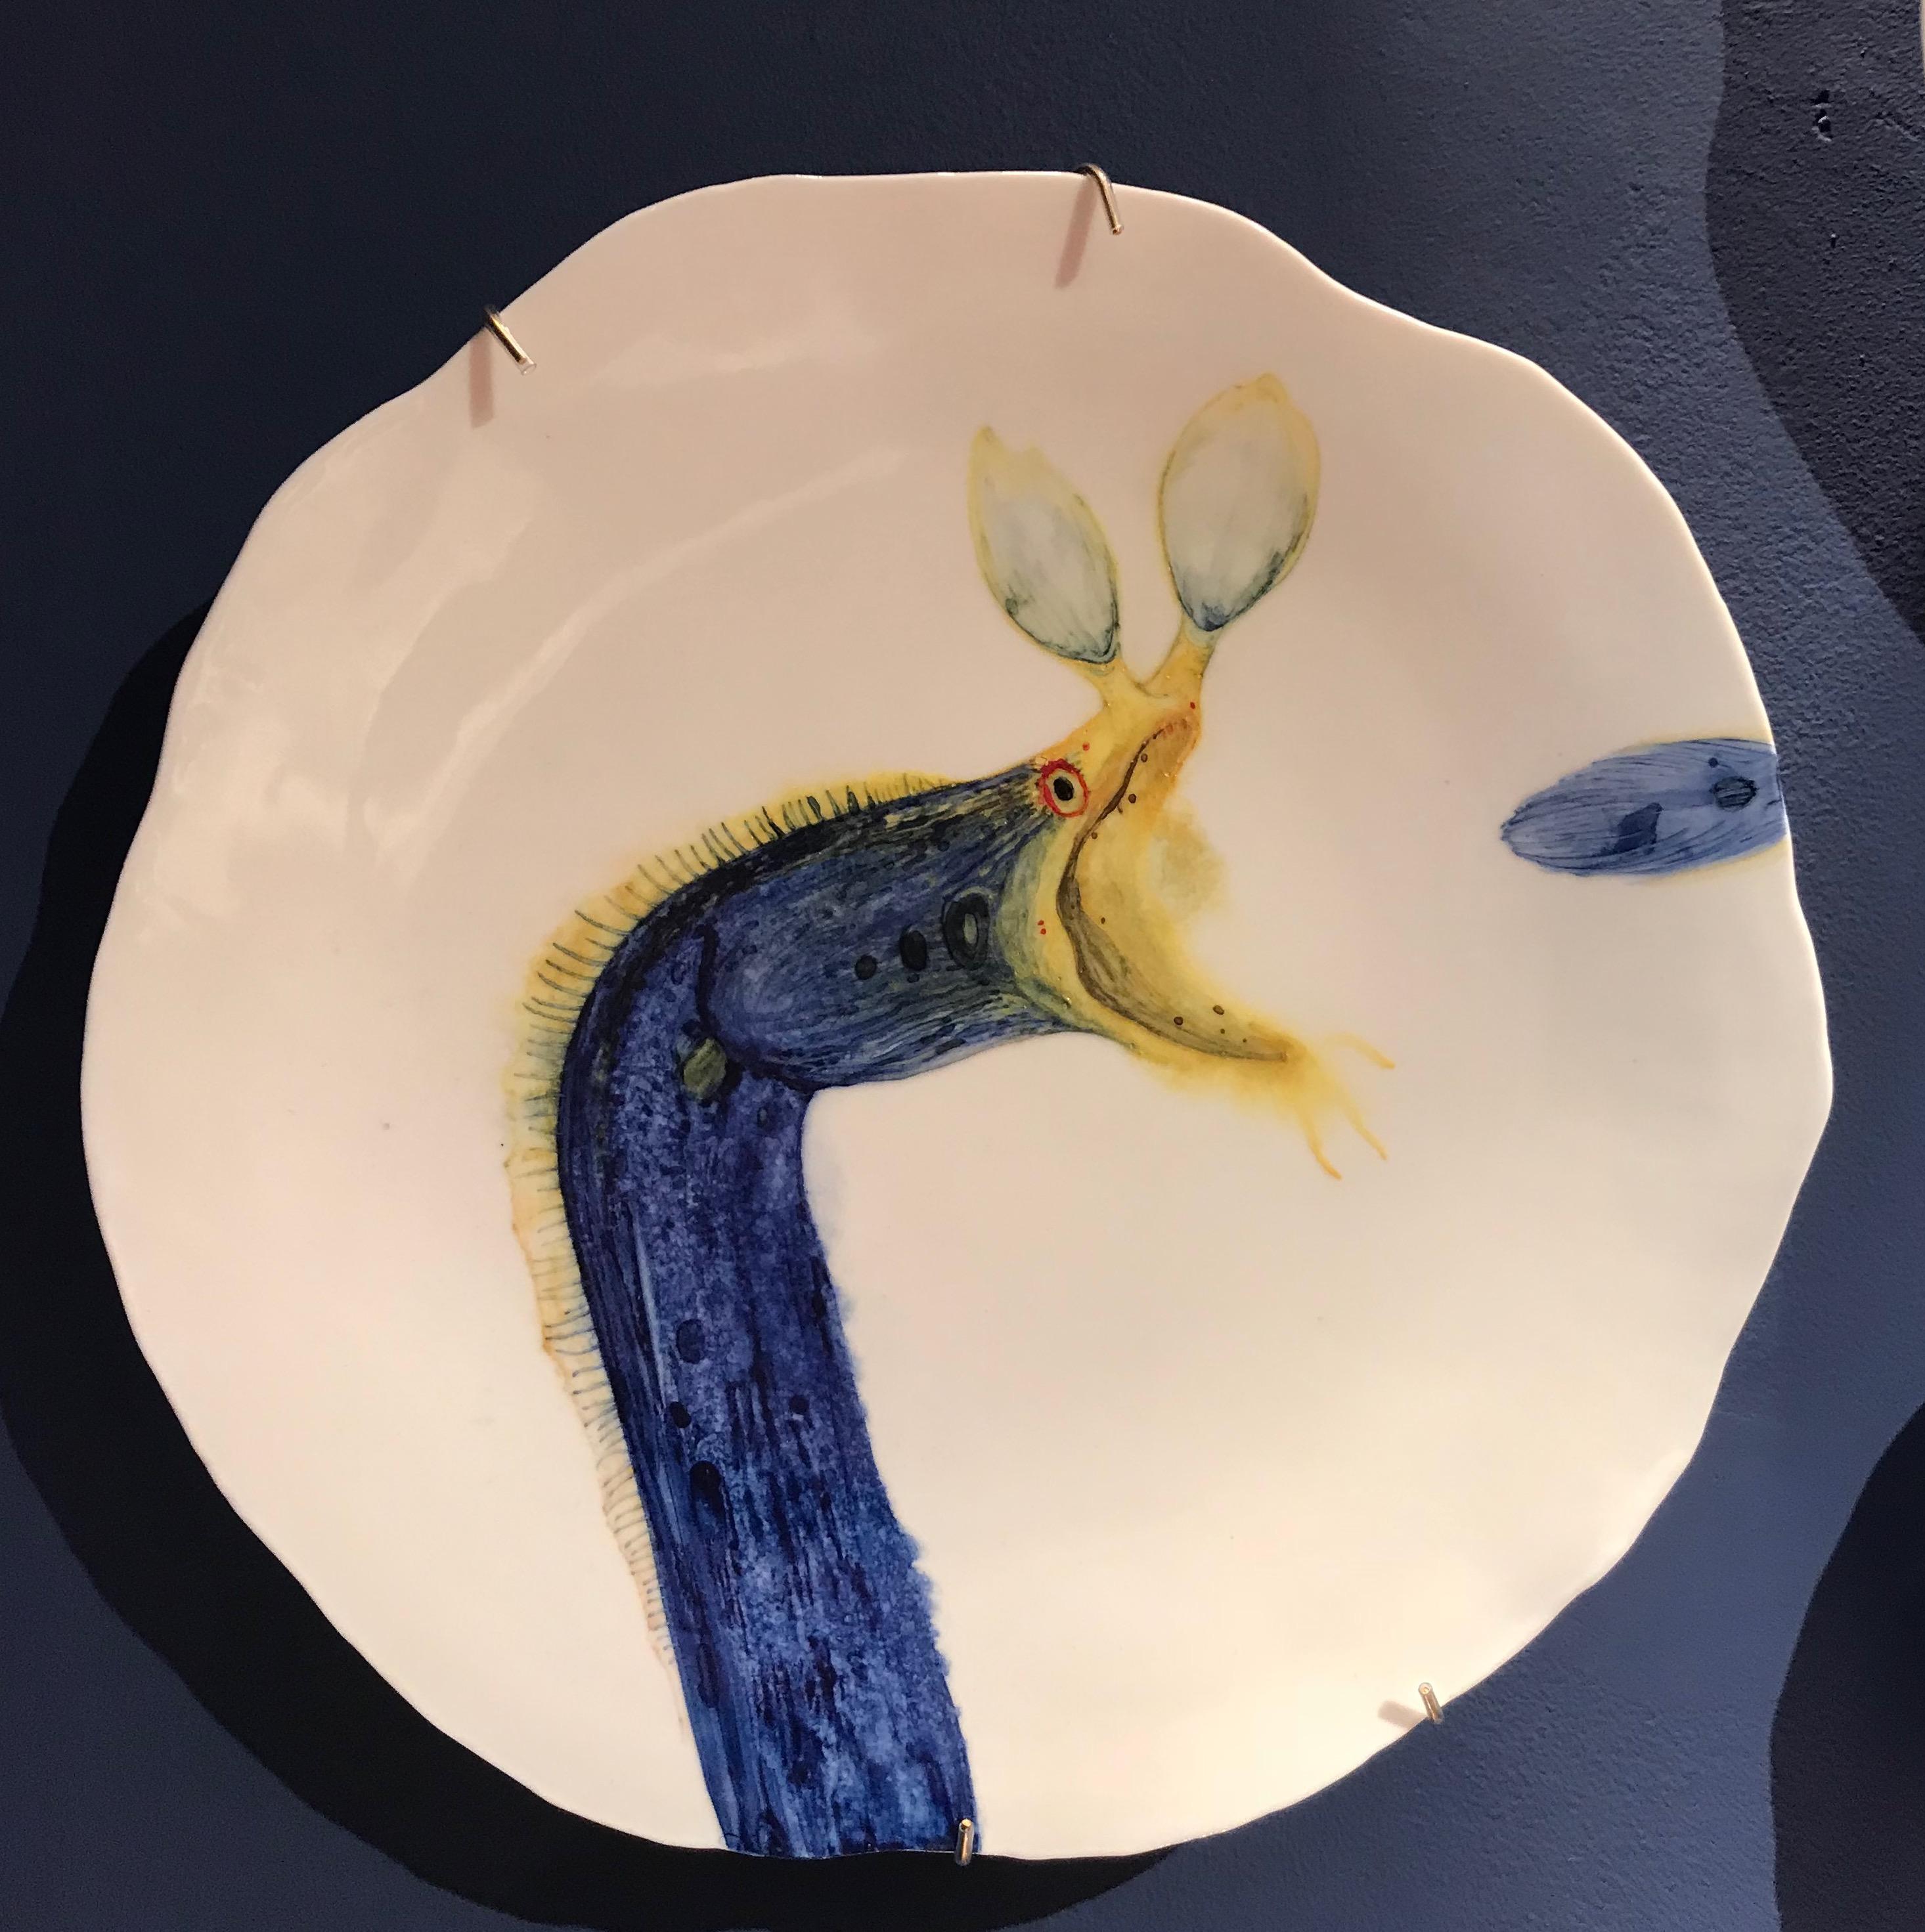 XUE SUN 2018 - Unique enameled ceramic wall platter - 29 cm diameter

XUE SUN - Born in Shandong -CHINA
EXHIBITIONS
2018 
Xue Sun « A table avec Xue SUN », Galerie Michèle Hayem, Paris
2017
Galerie Jean Brolly, Paris 
2016 Carolein Smit et